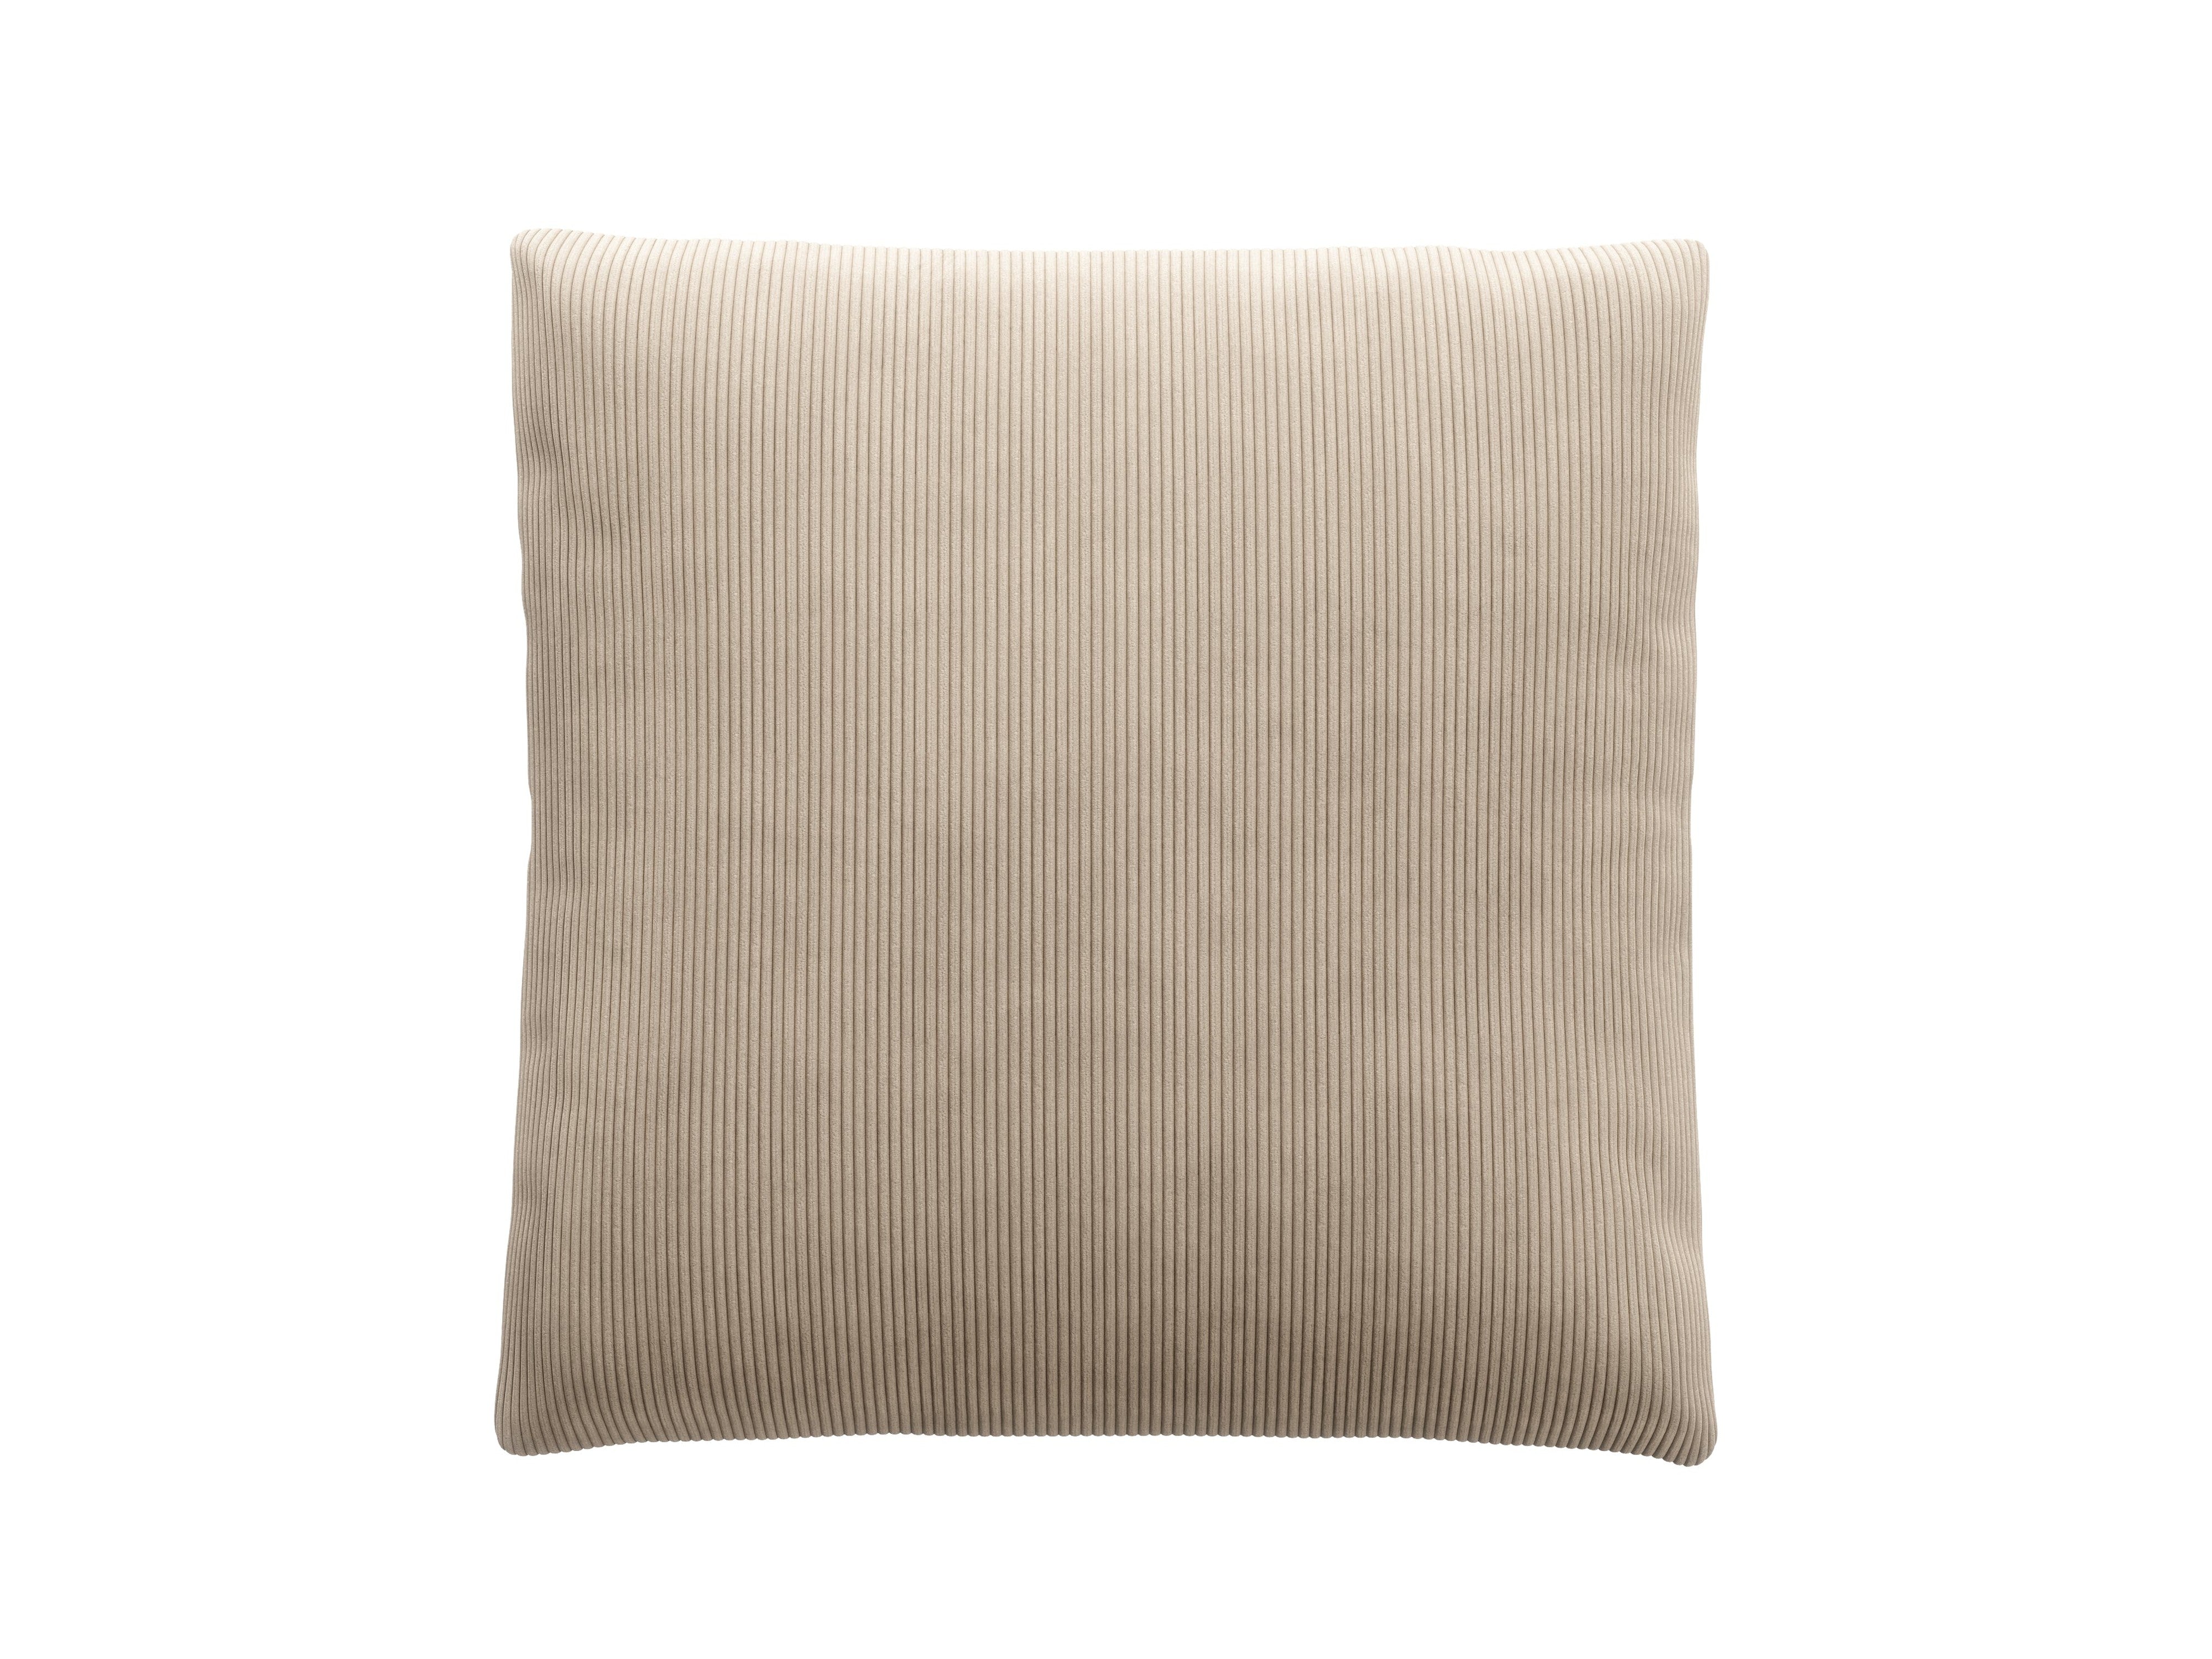 jumbo pillow - cord velours - sand